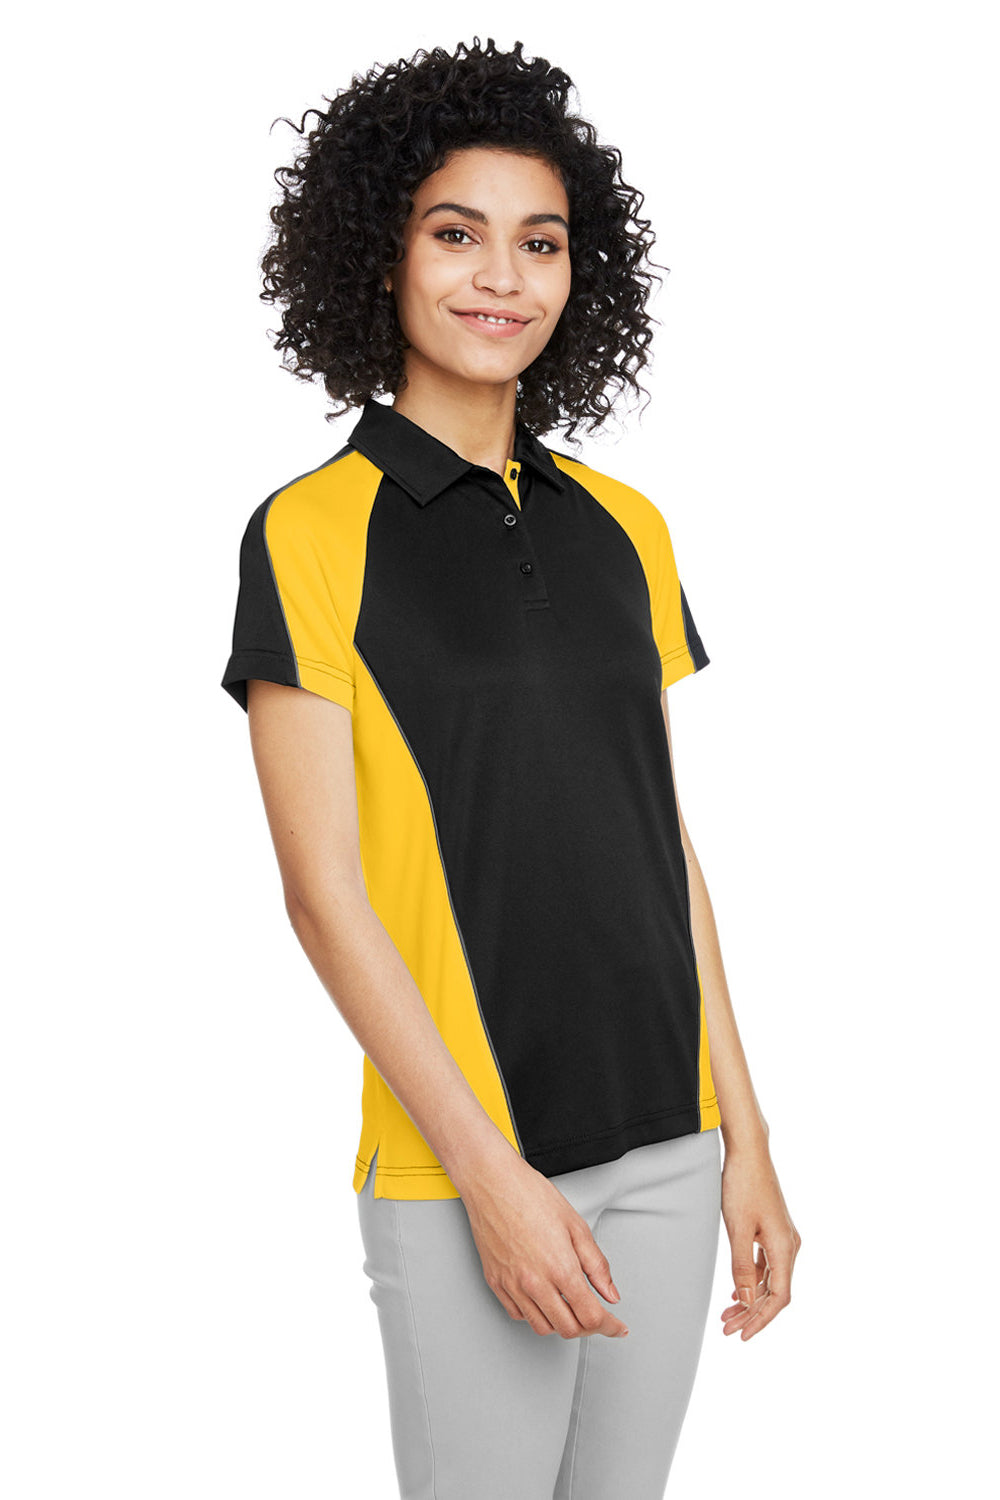 Harriton M385W Womens Advantage Performance Moisture Wicking Colorblock Short Sleeve Polo Shirt Black/Sunray Yellow 3Q